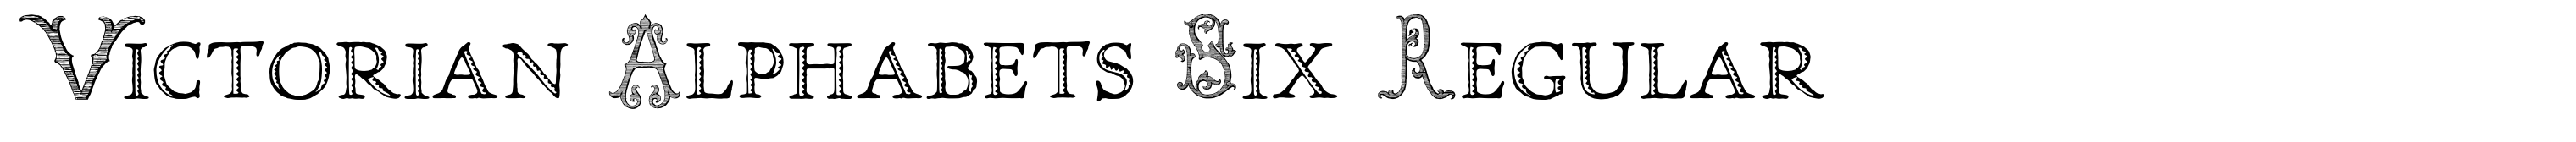 Victorian Alphabets Six Regular